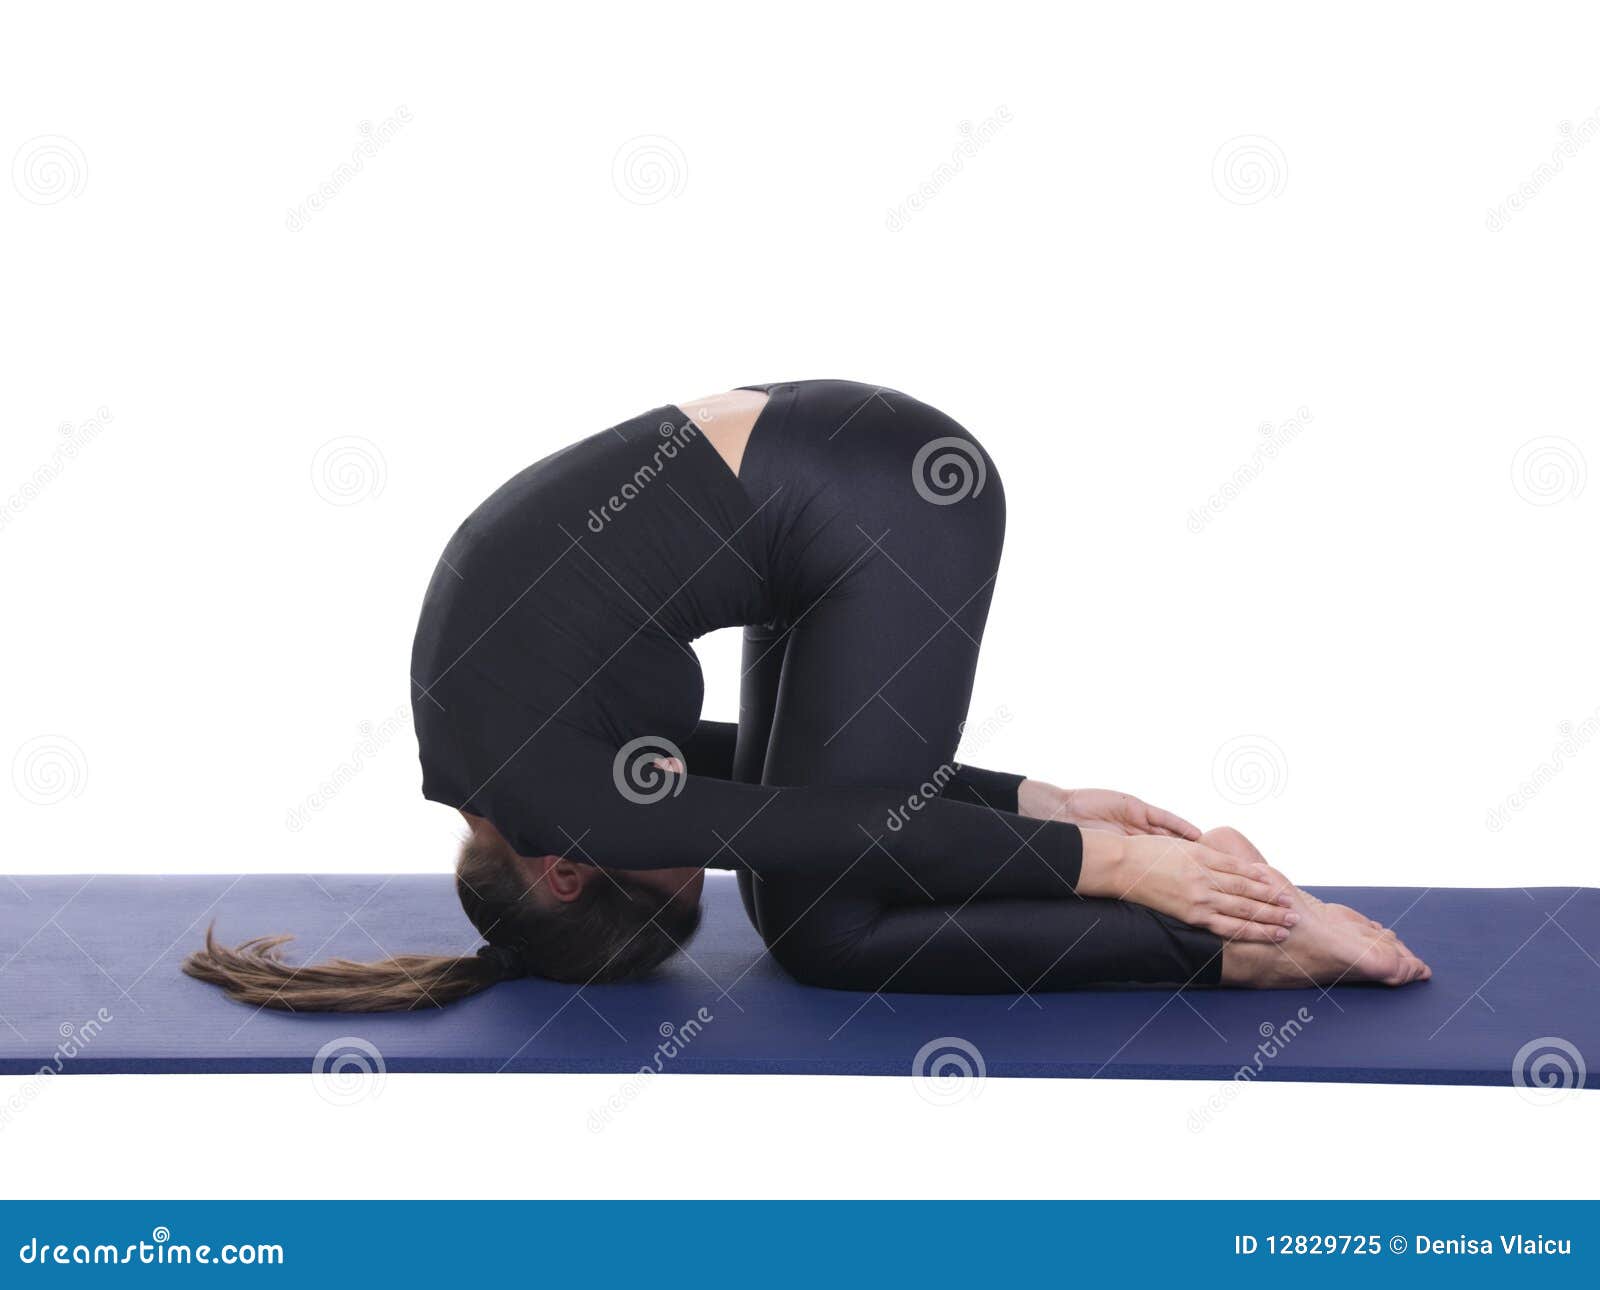 12 Strange Looking Yoga Poses - YOGA PRACTICE